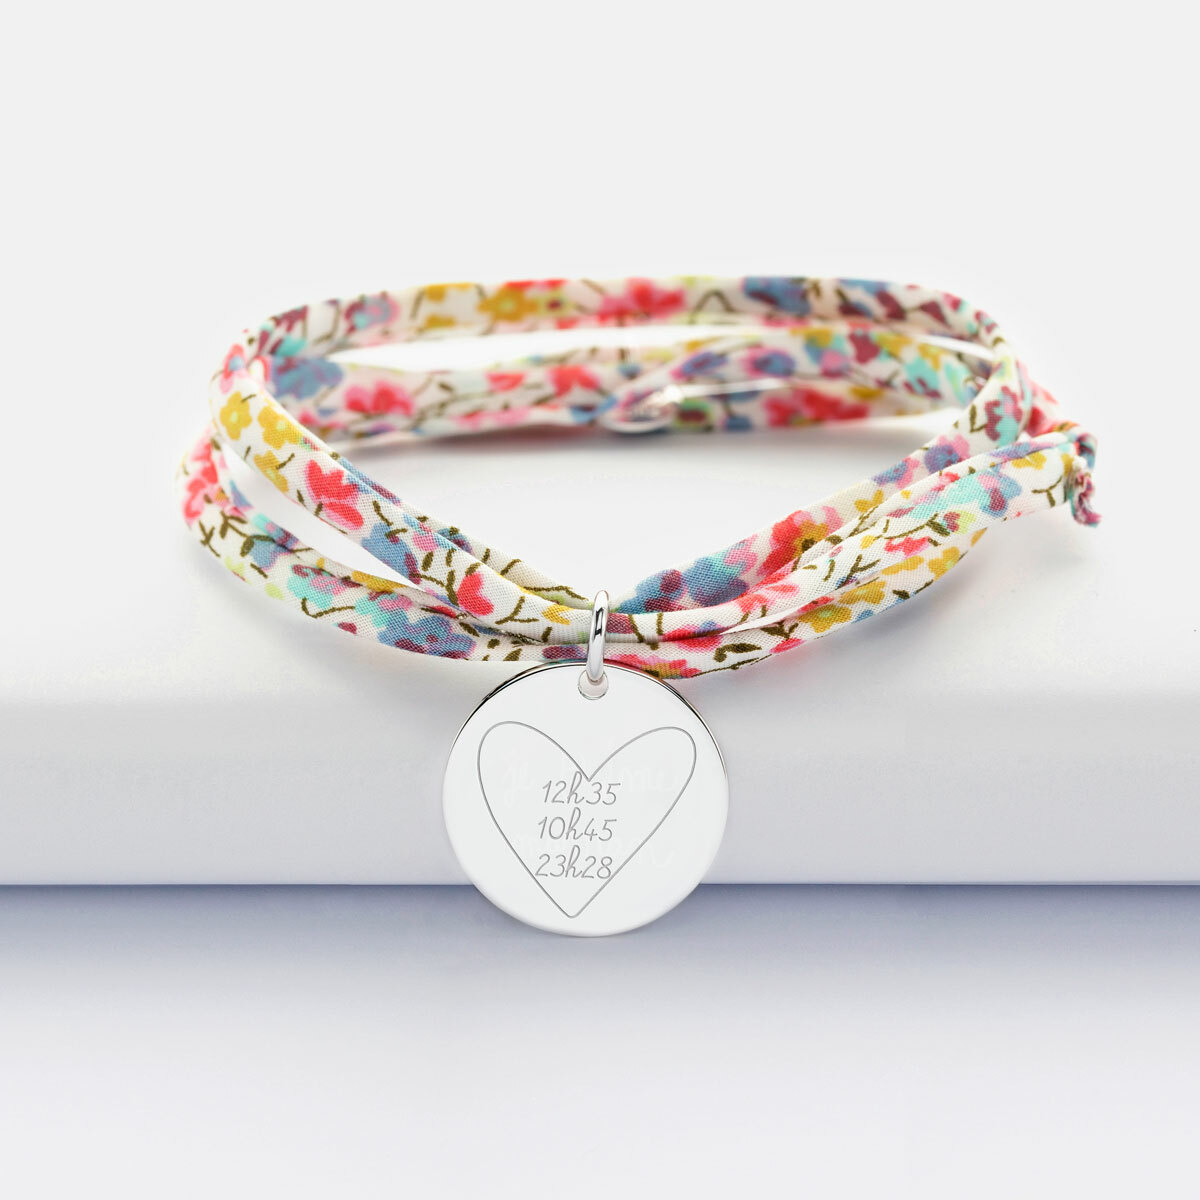 Personalised Liberty bracelet 3 turns engraved silver pendant 19mm - HappyBulle x Mon petit Léon